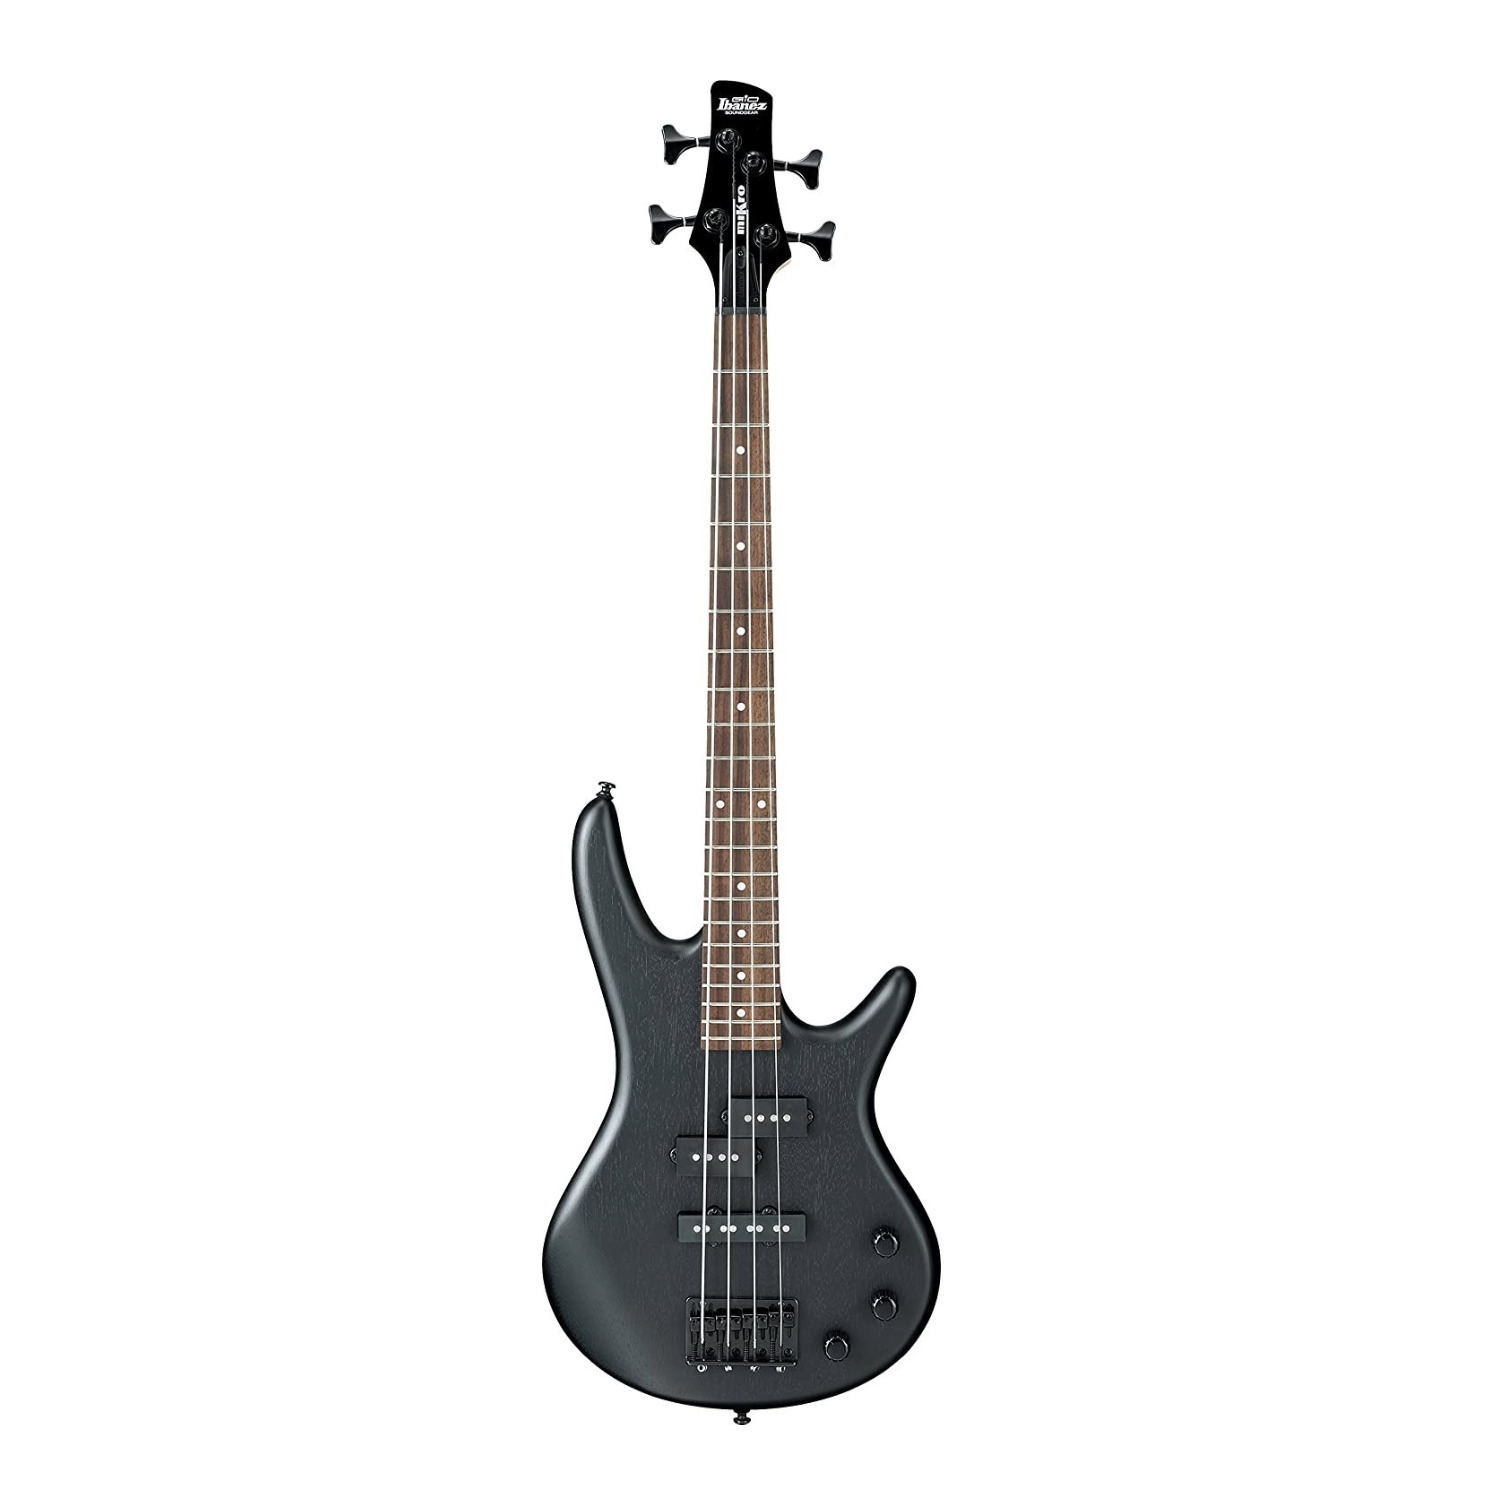 Ibanez Mikro GSRM20 28.6"" Scale Electric Bass Guitar in Black -  GSRM20BWK